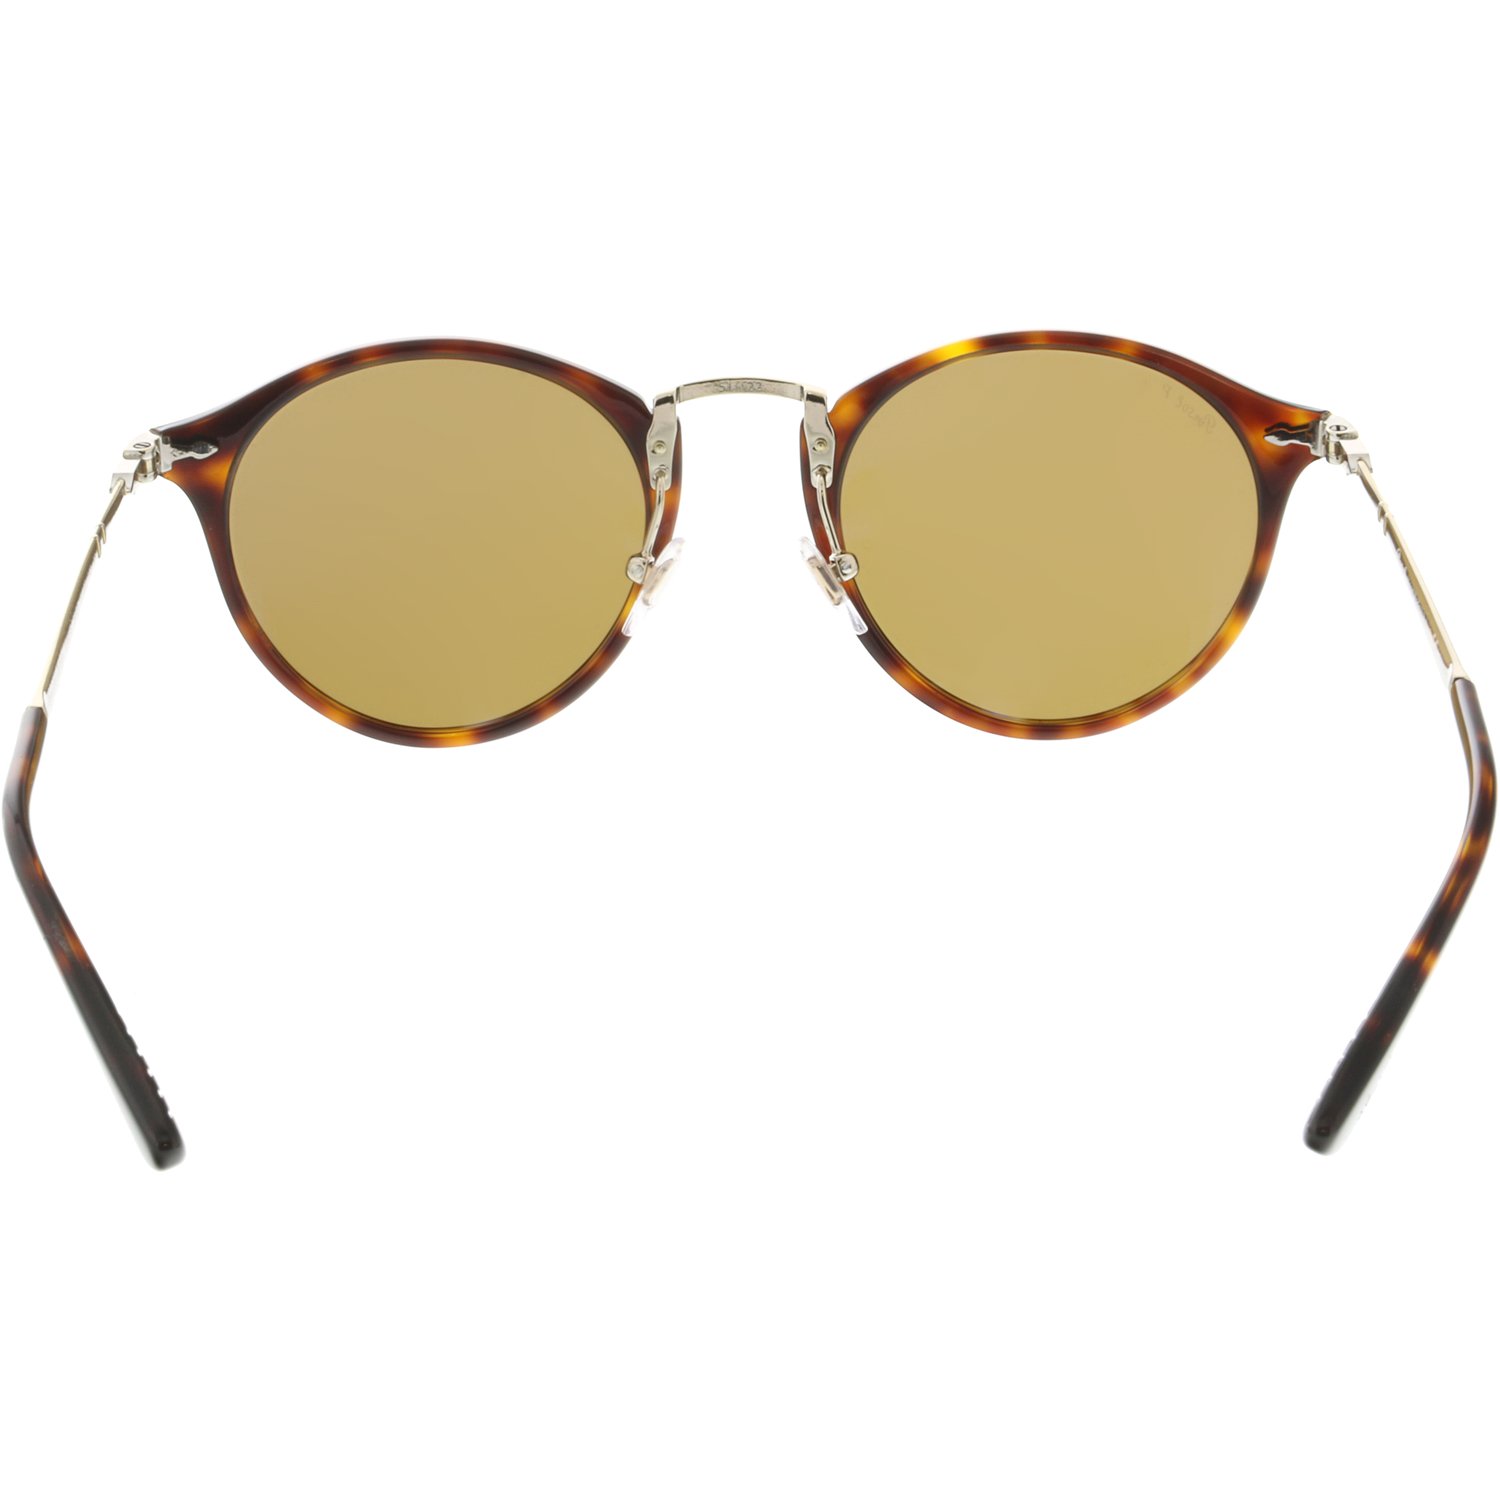 Persol Men's Polarized PO3166S-24/57-51 Brown Round Sunglasses - image 3 of 3